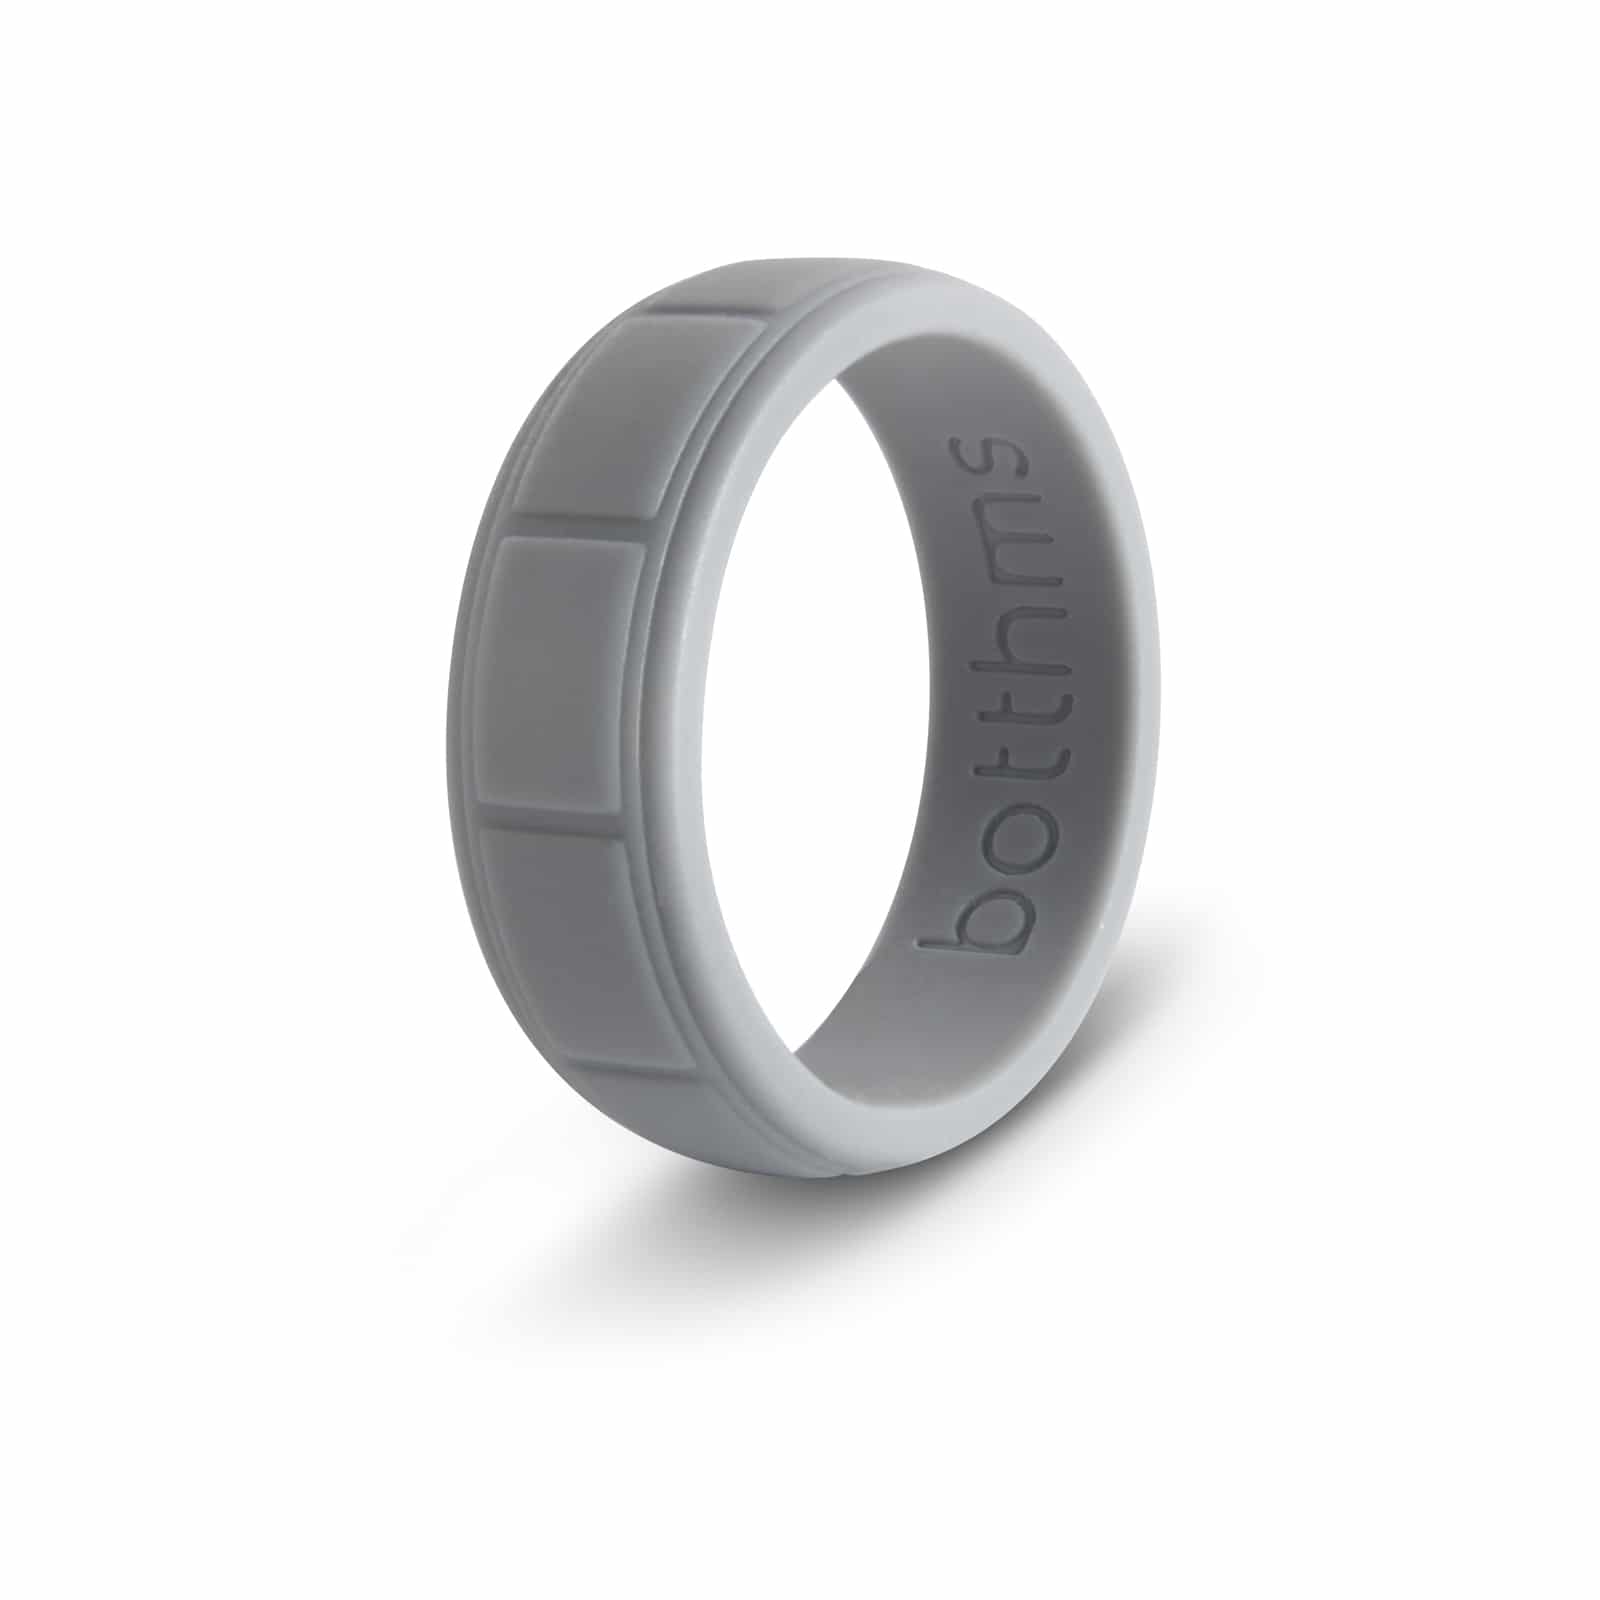 botthms Grey Lifestyle Silicone Ring